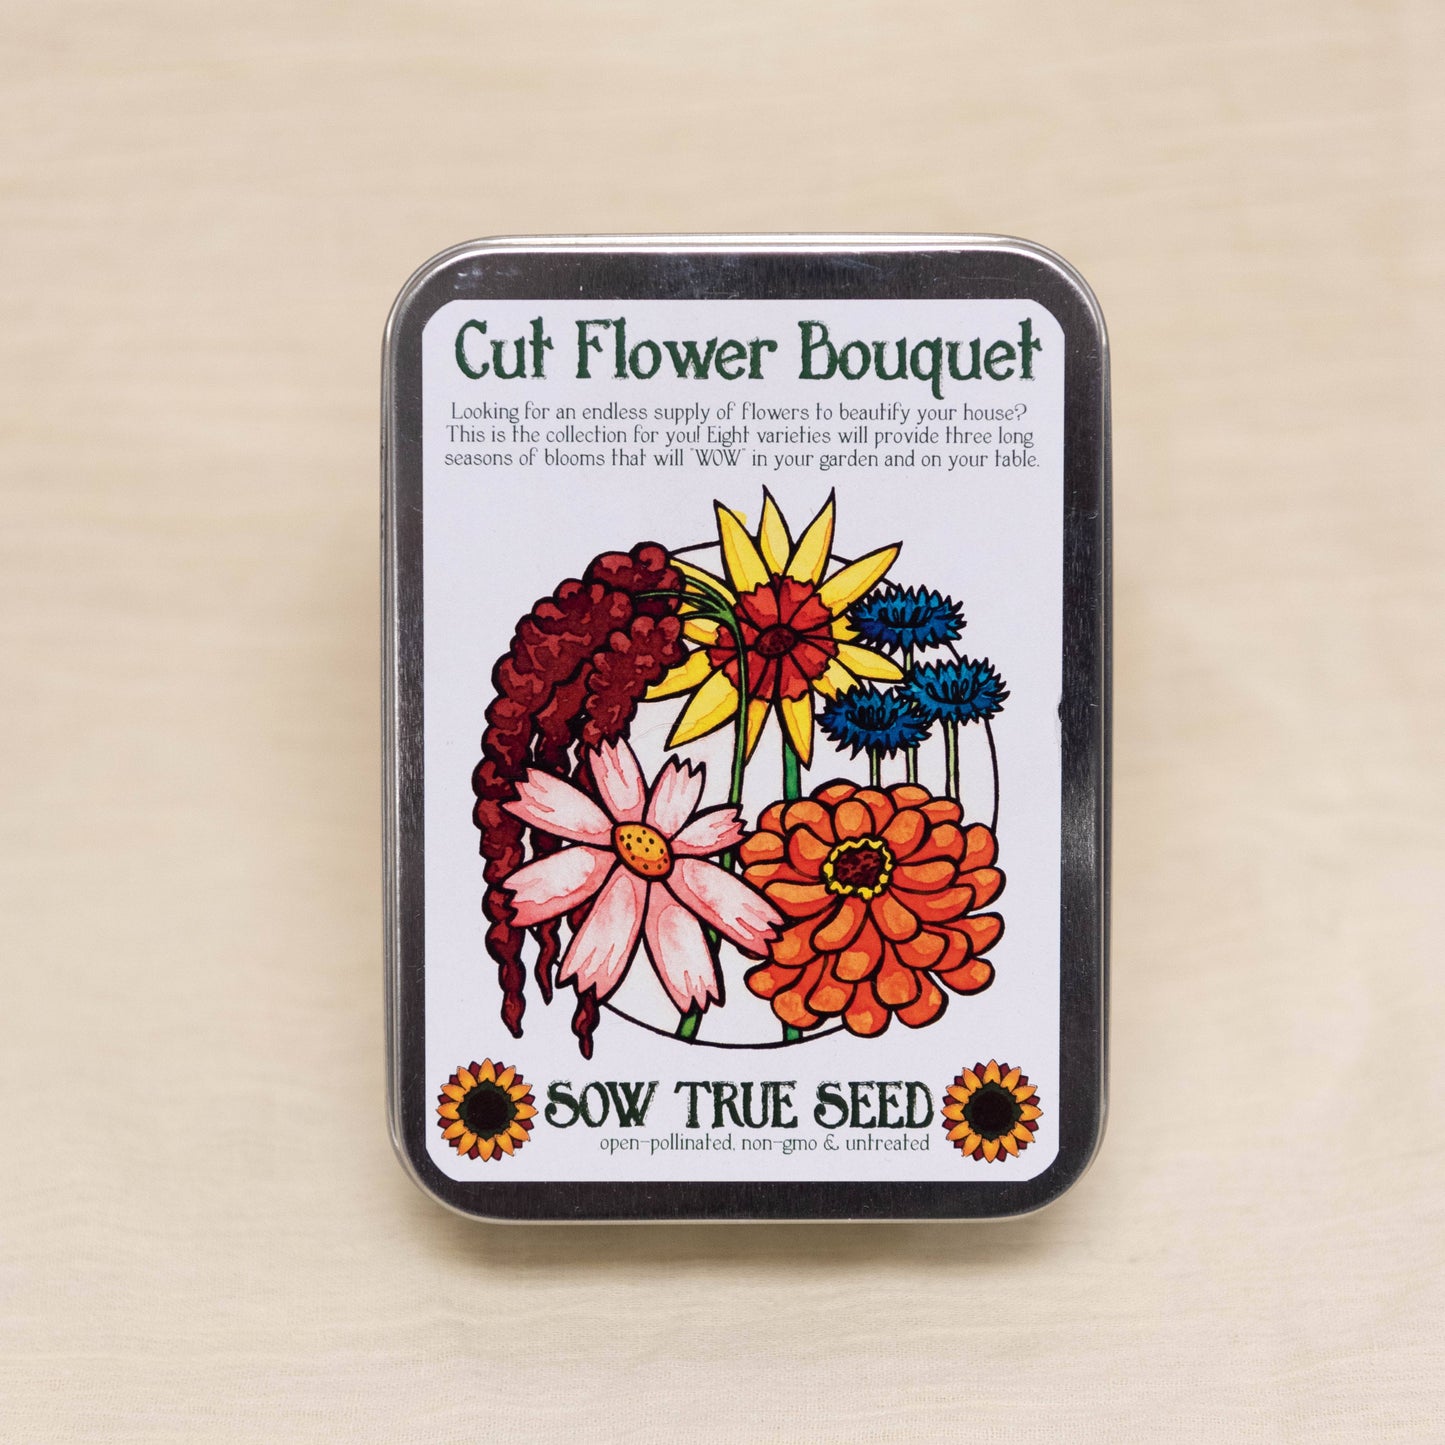 Sow True Seed - Cut Flower Bouquet Garden Collection Gift Tin